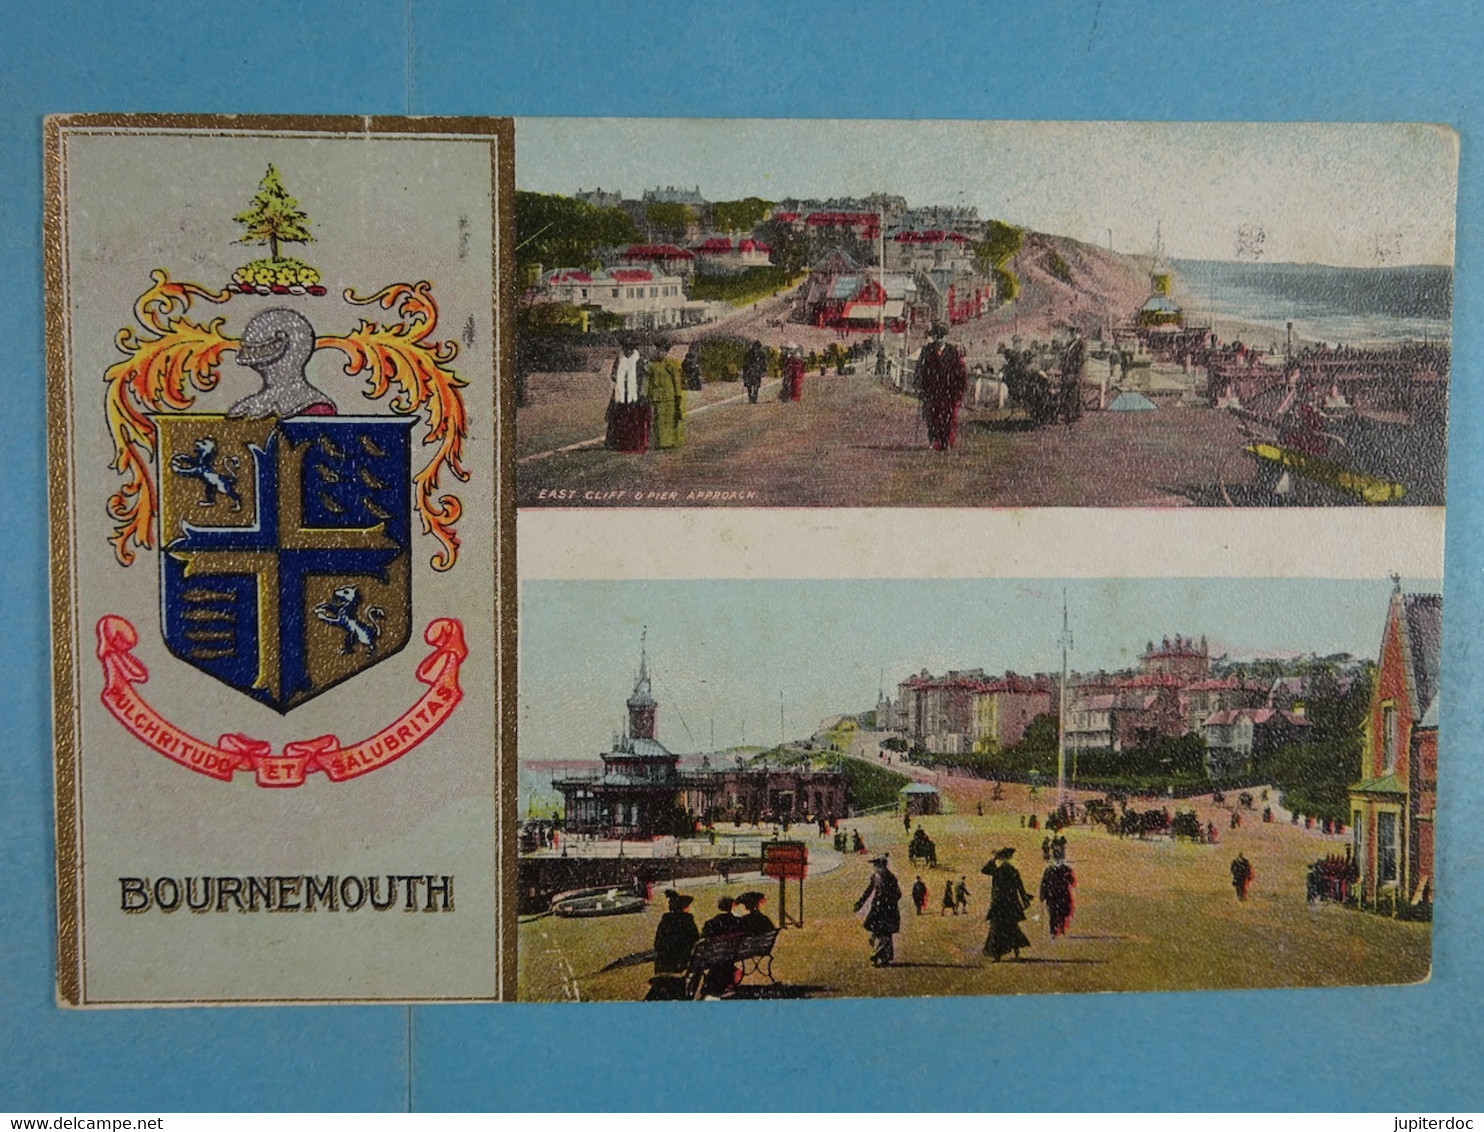 Bournemouth - Bournemouth (ab 1972)